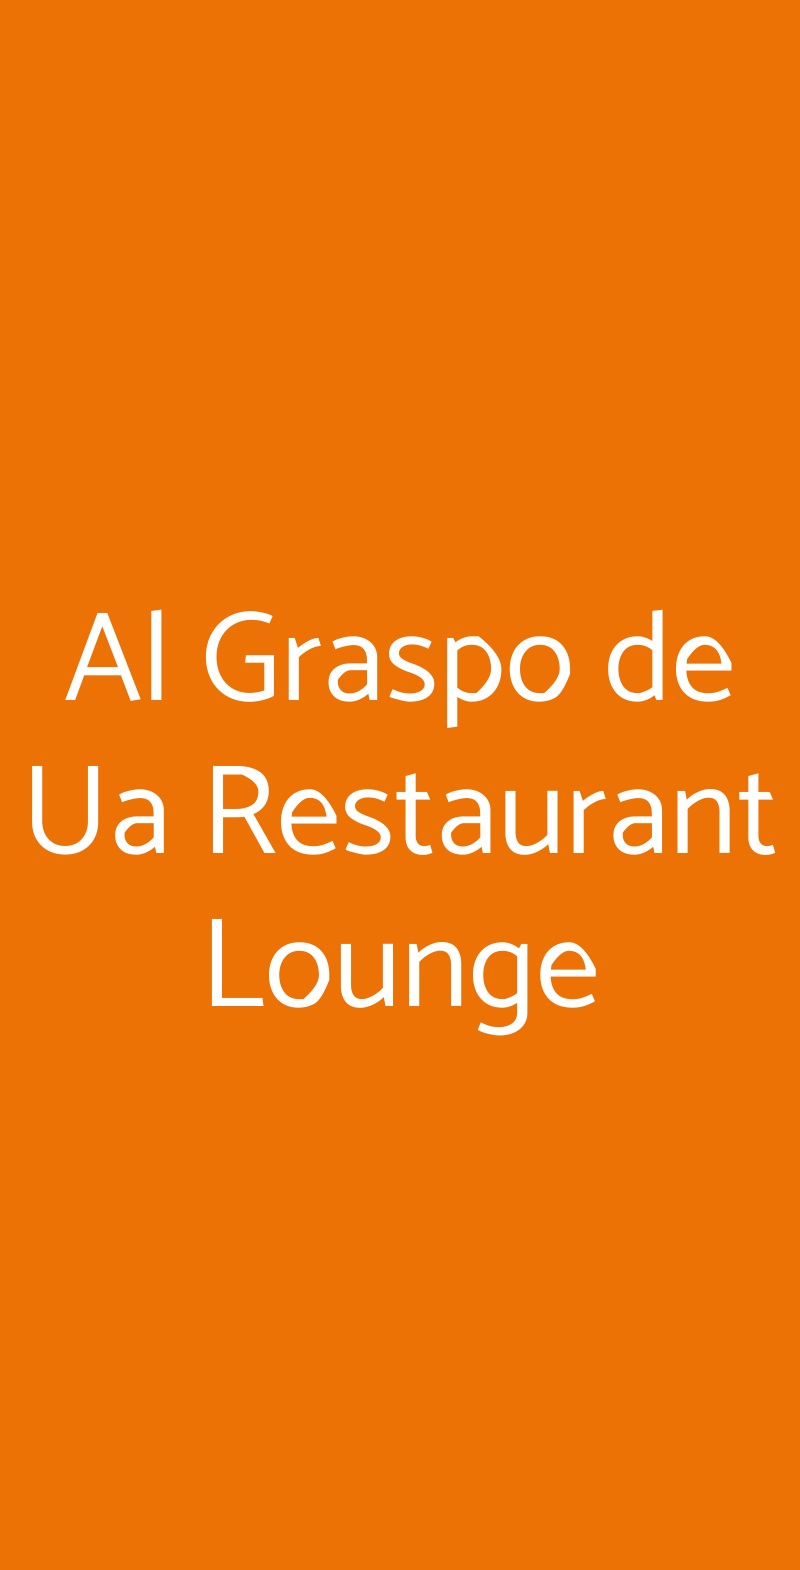 Al Graspo de Ua Restaurant Lounge Venezia menù 1 pagina